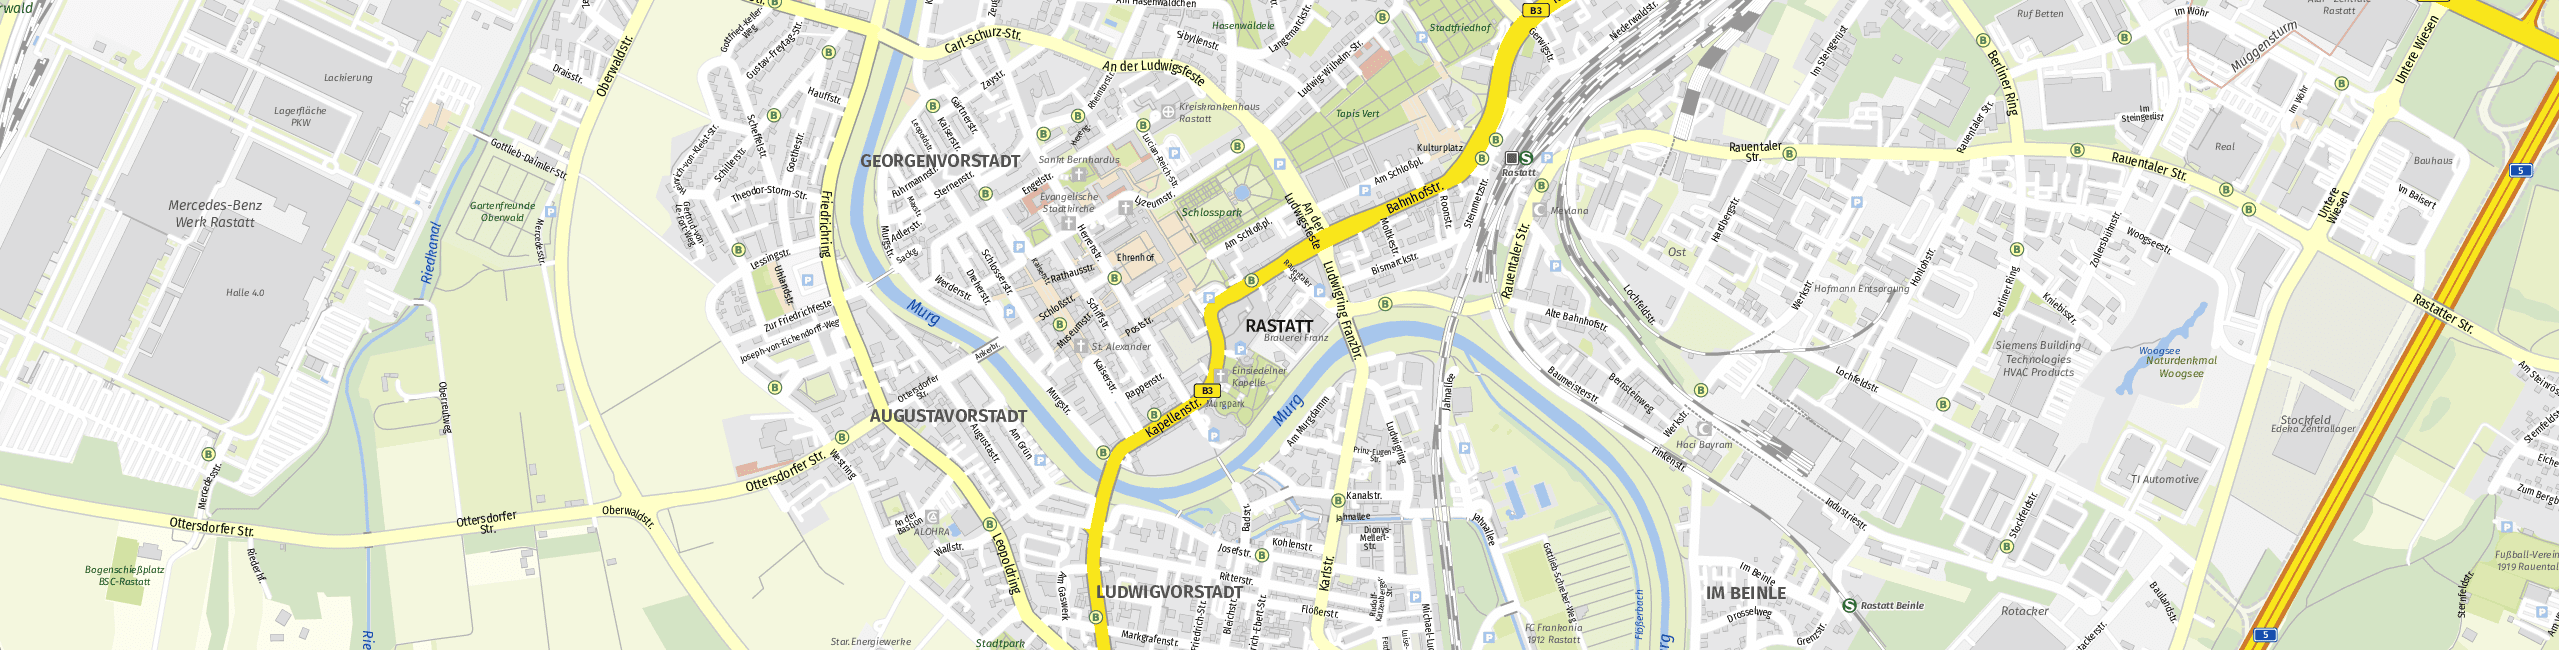 Stadtplan Rastatt zum Downloaden.